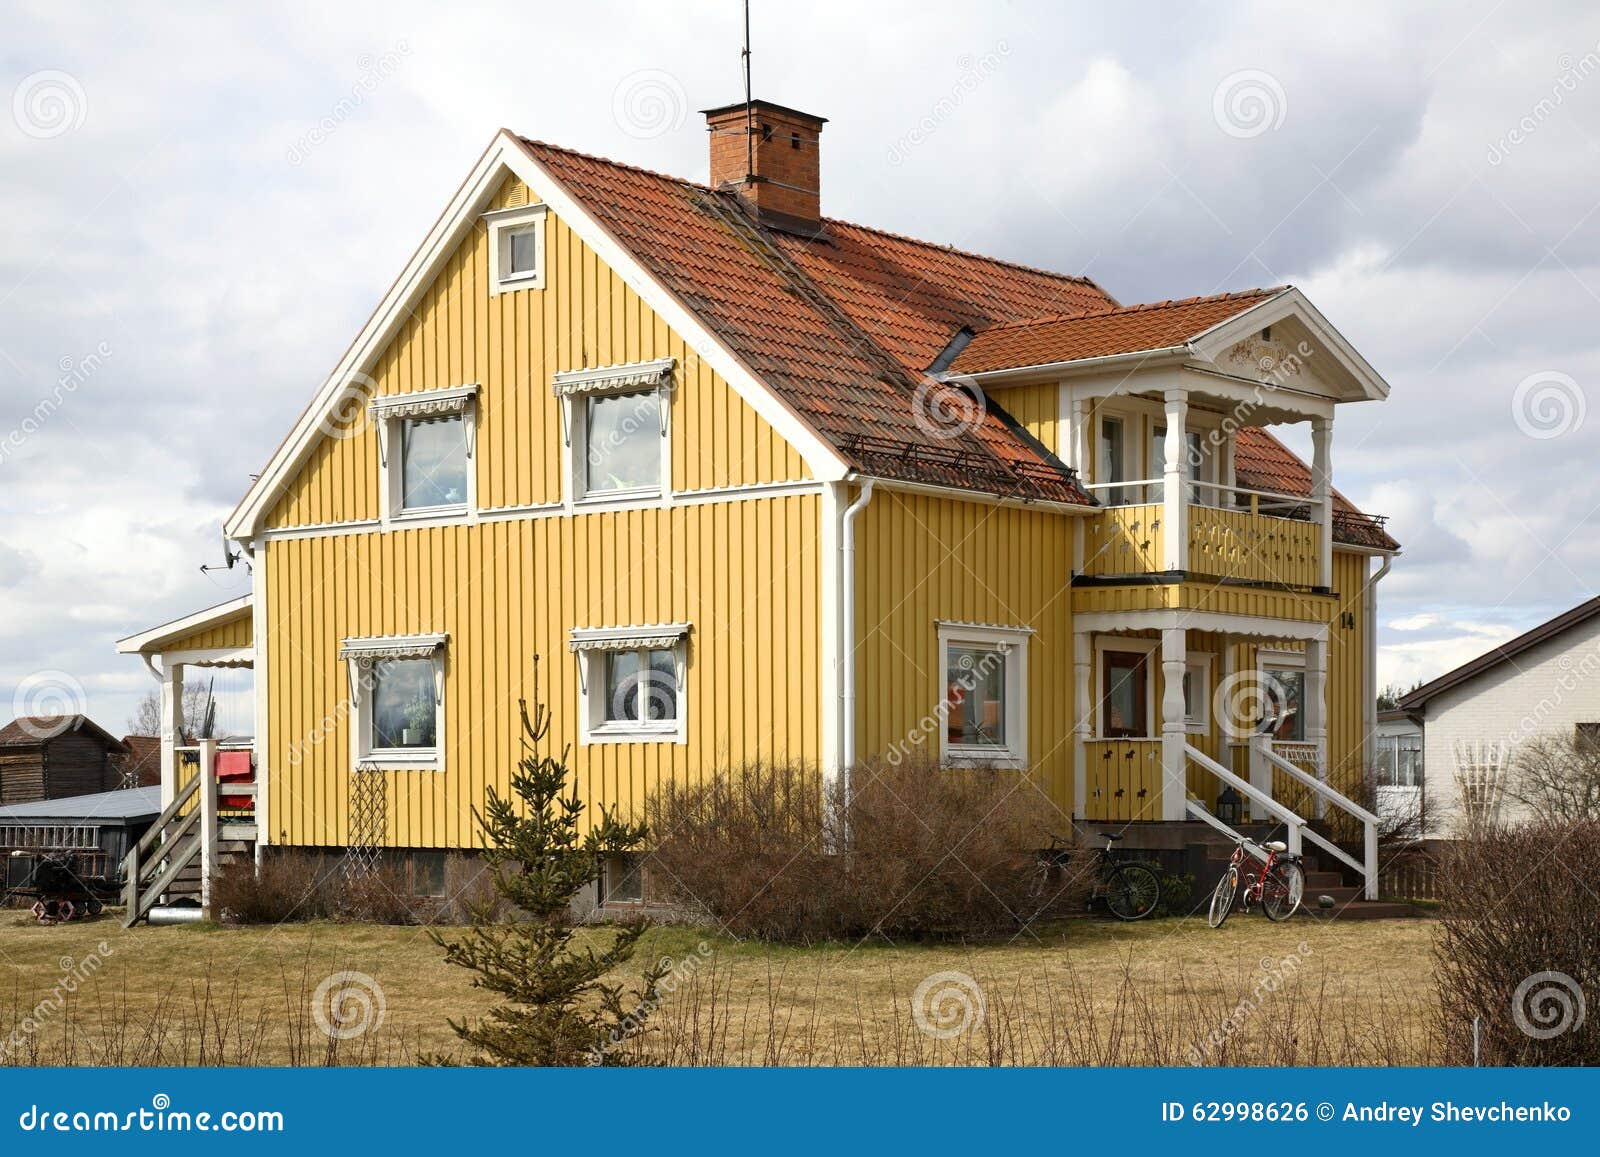 building in nusnas. dalarna county. sweden